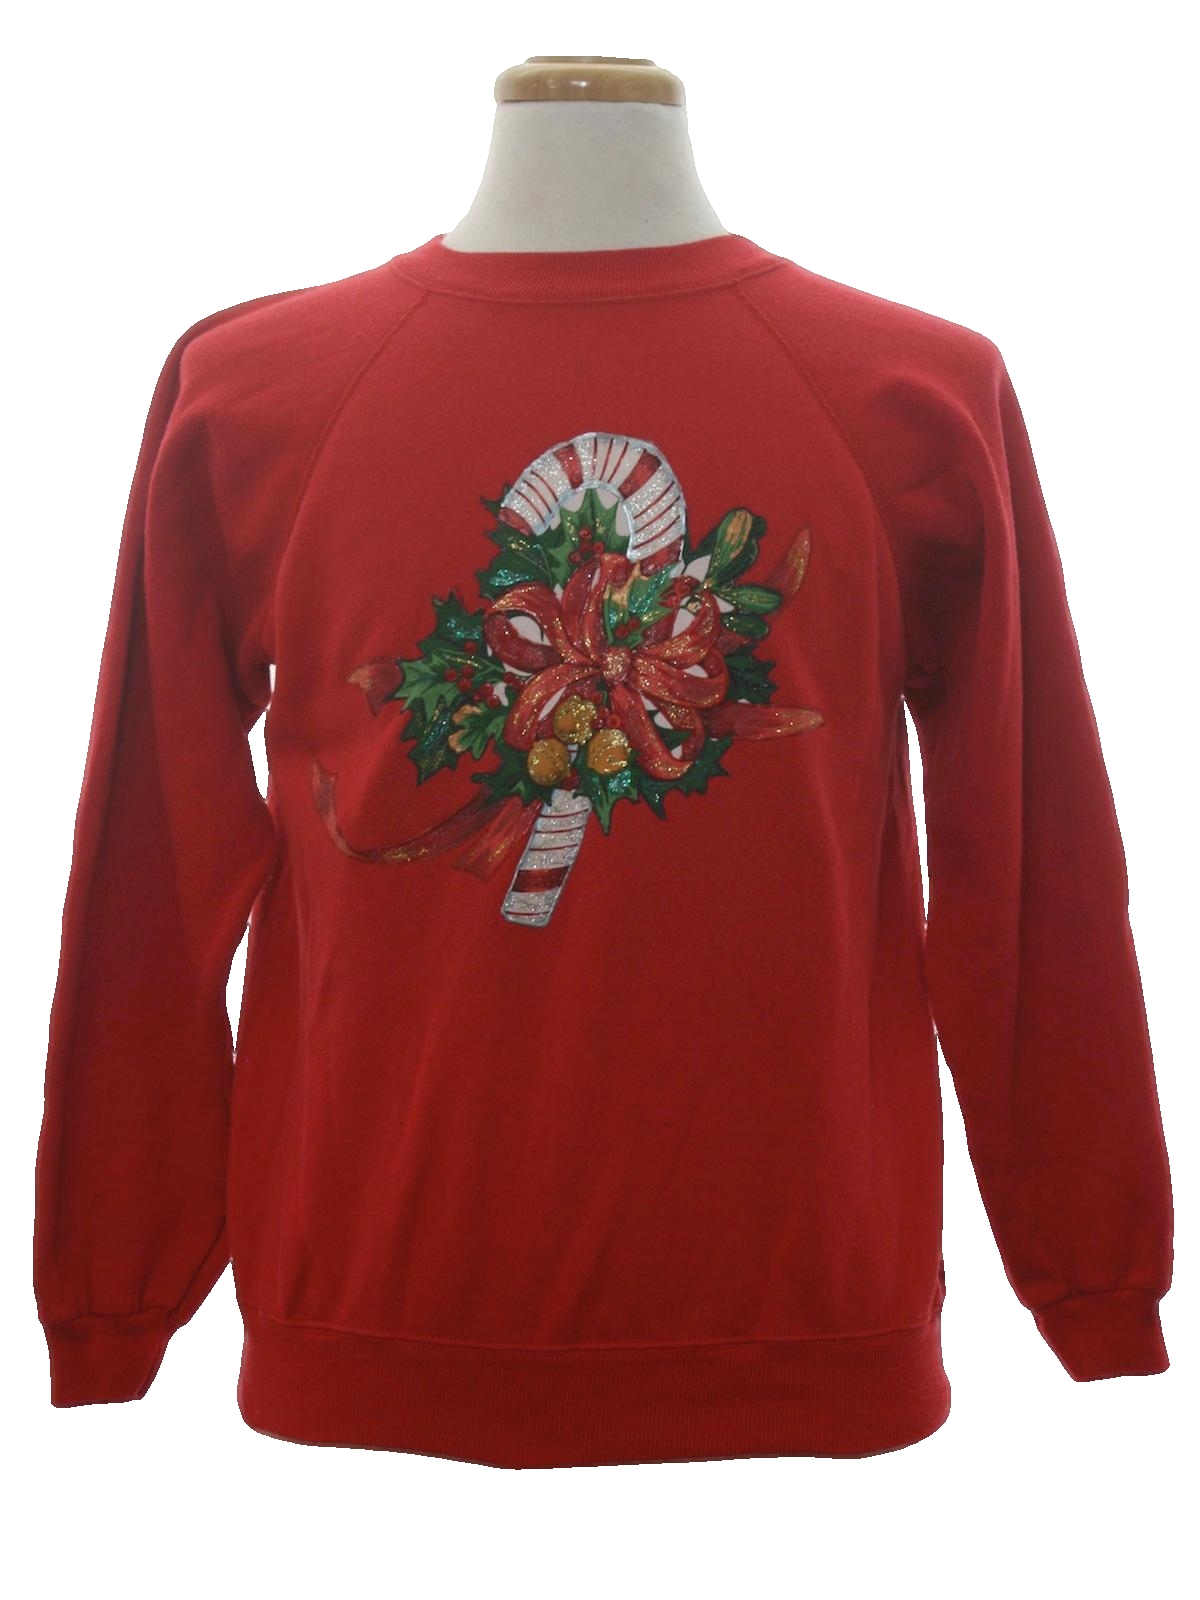 Puffy Glitter Painted Ugly Christmas Sweatshirt: -Hanes Her Way- Unisex ...